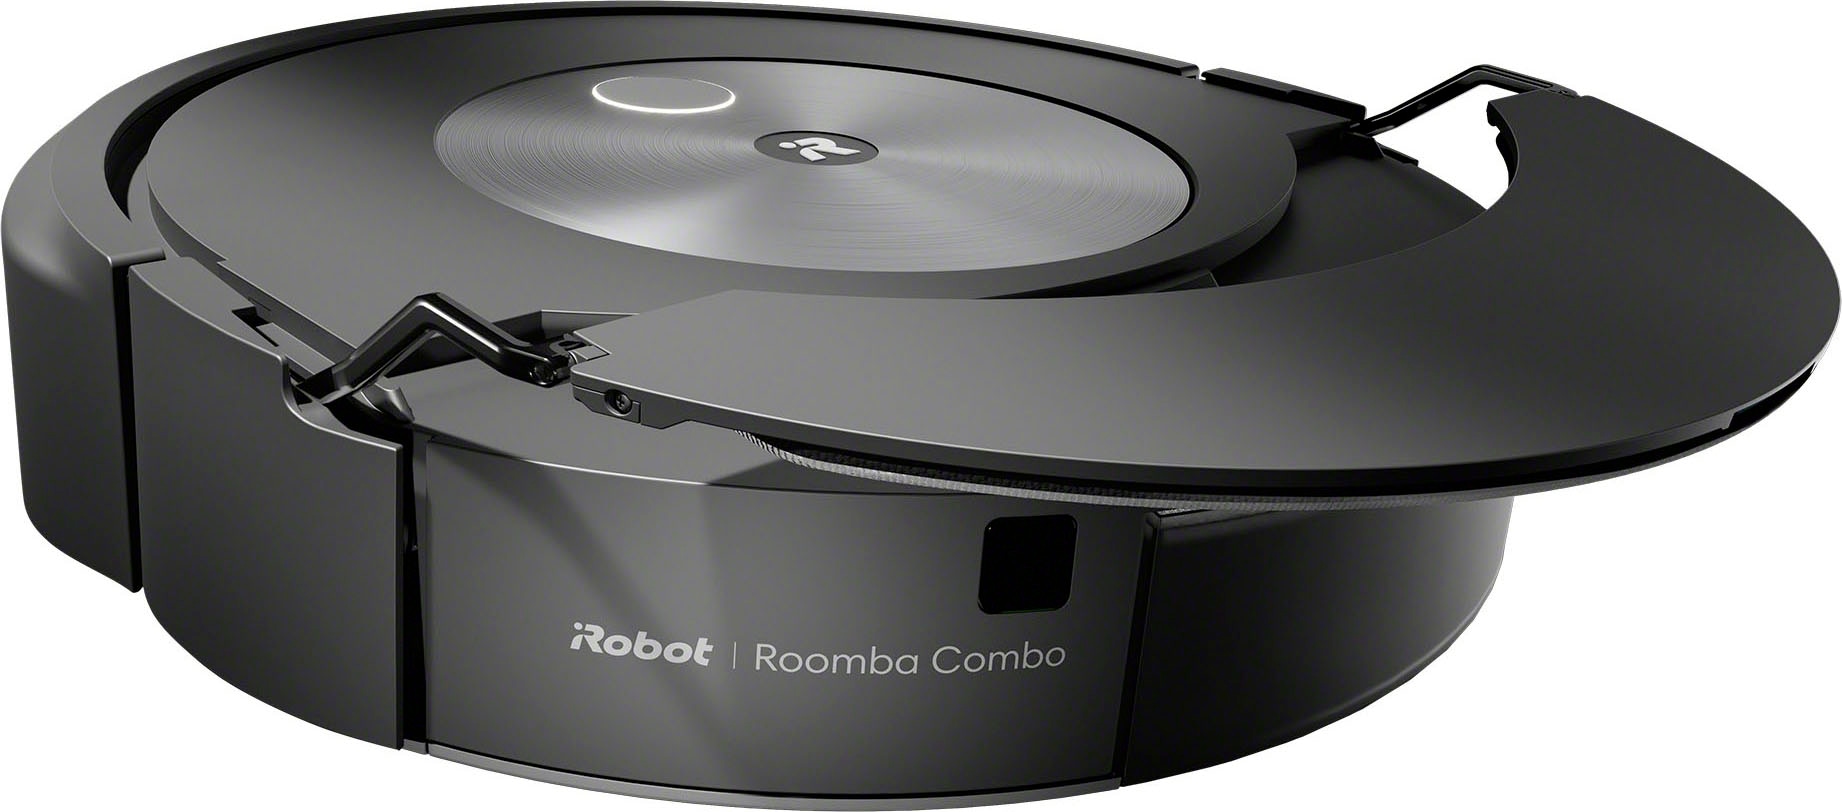 j7 und Combo iRobot Saug- »Roomba kaufen Wischroboter (c715840)«, Saugroboter